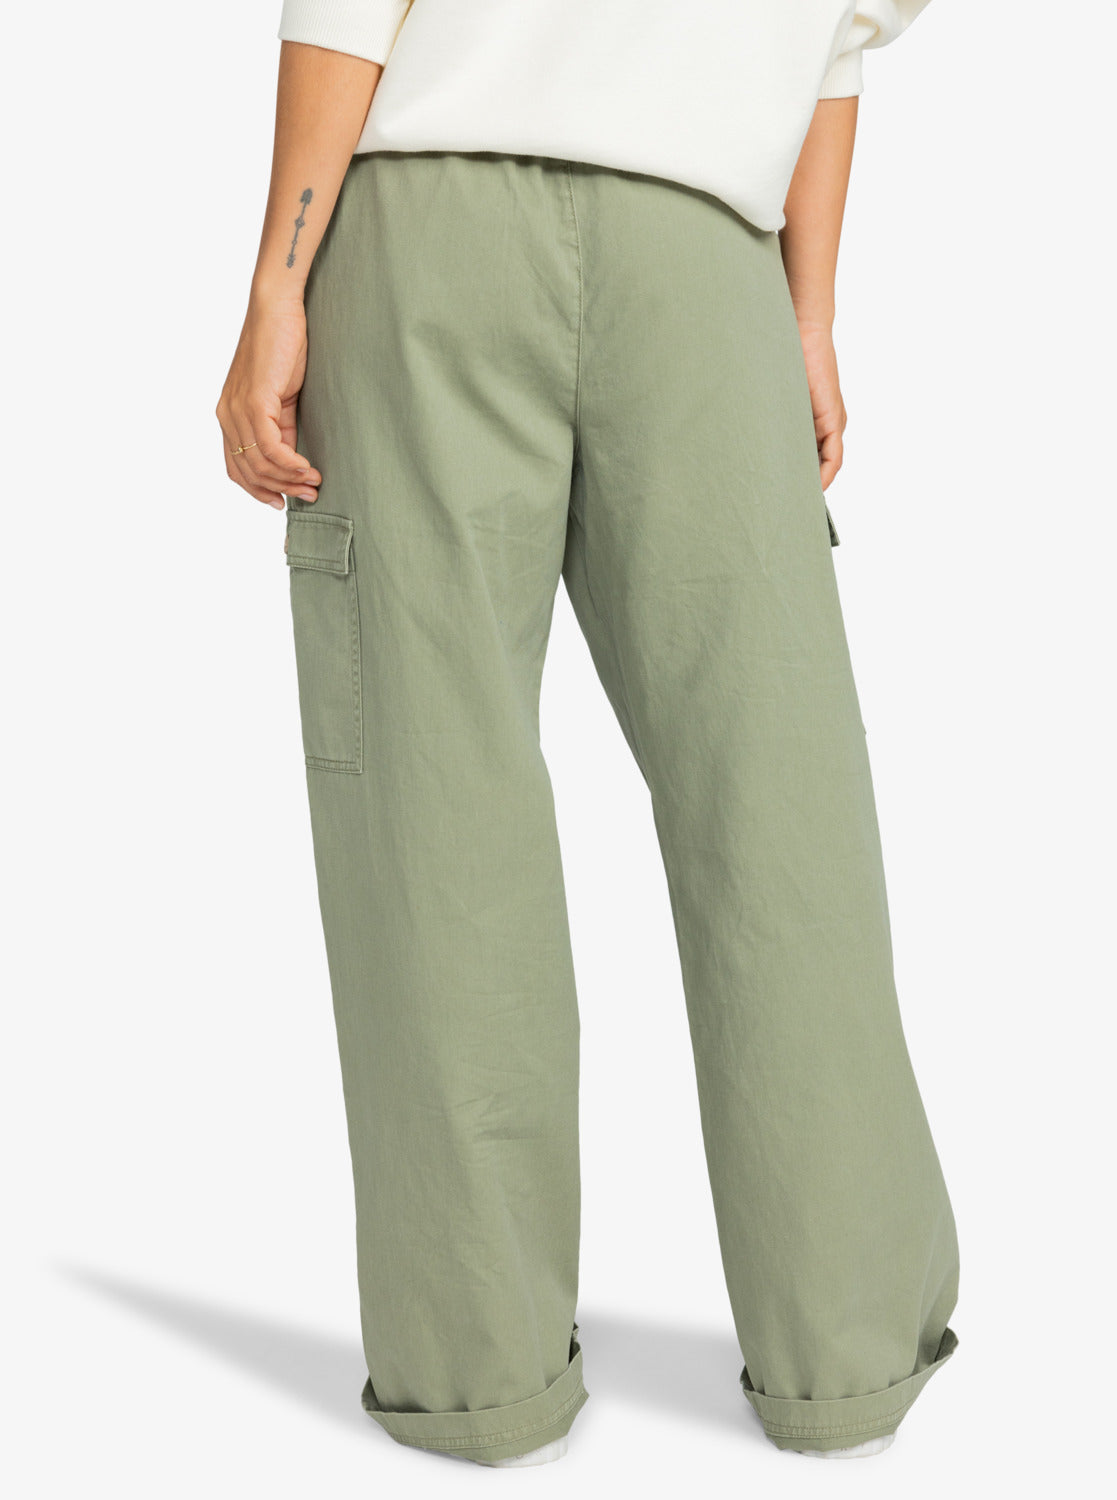 Lady Trousers Women Clothes Women Cargo Pants Hip Hop Baggy Solid Color  Multi Pockets Elastic Waist Match Top Loose Breathable - Pants & Capris -  AliExpress